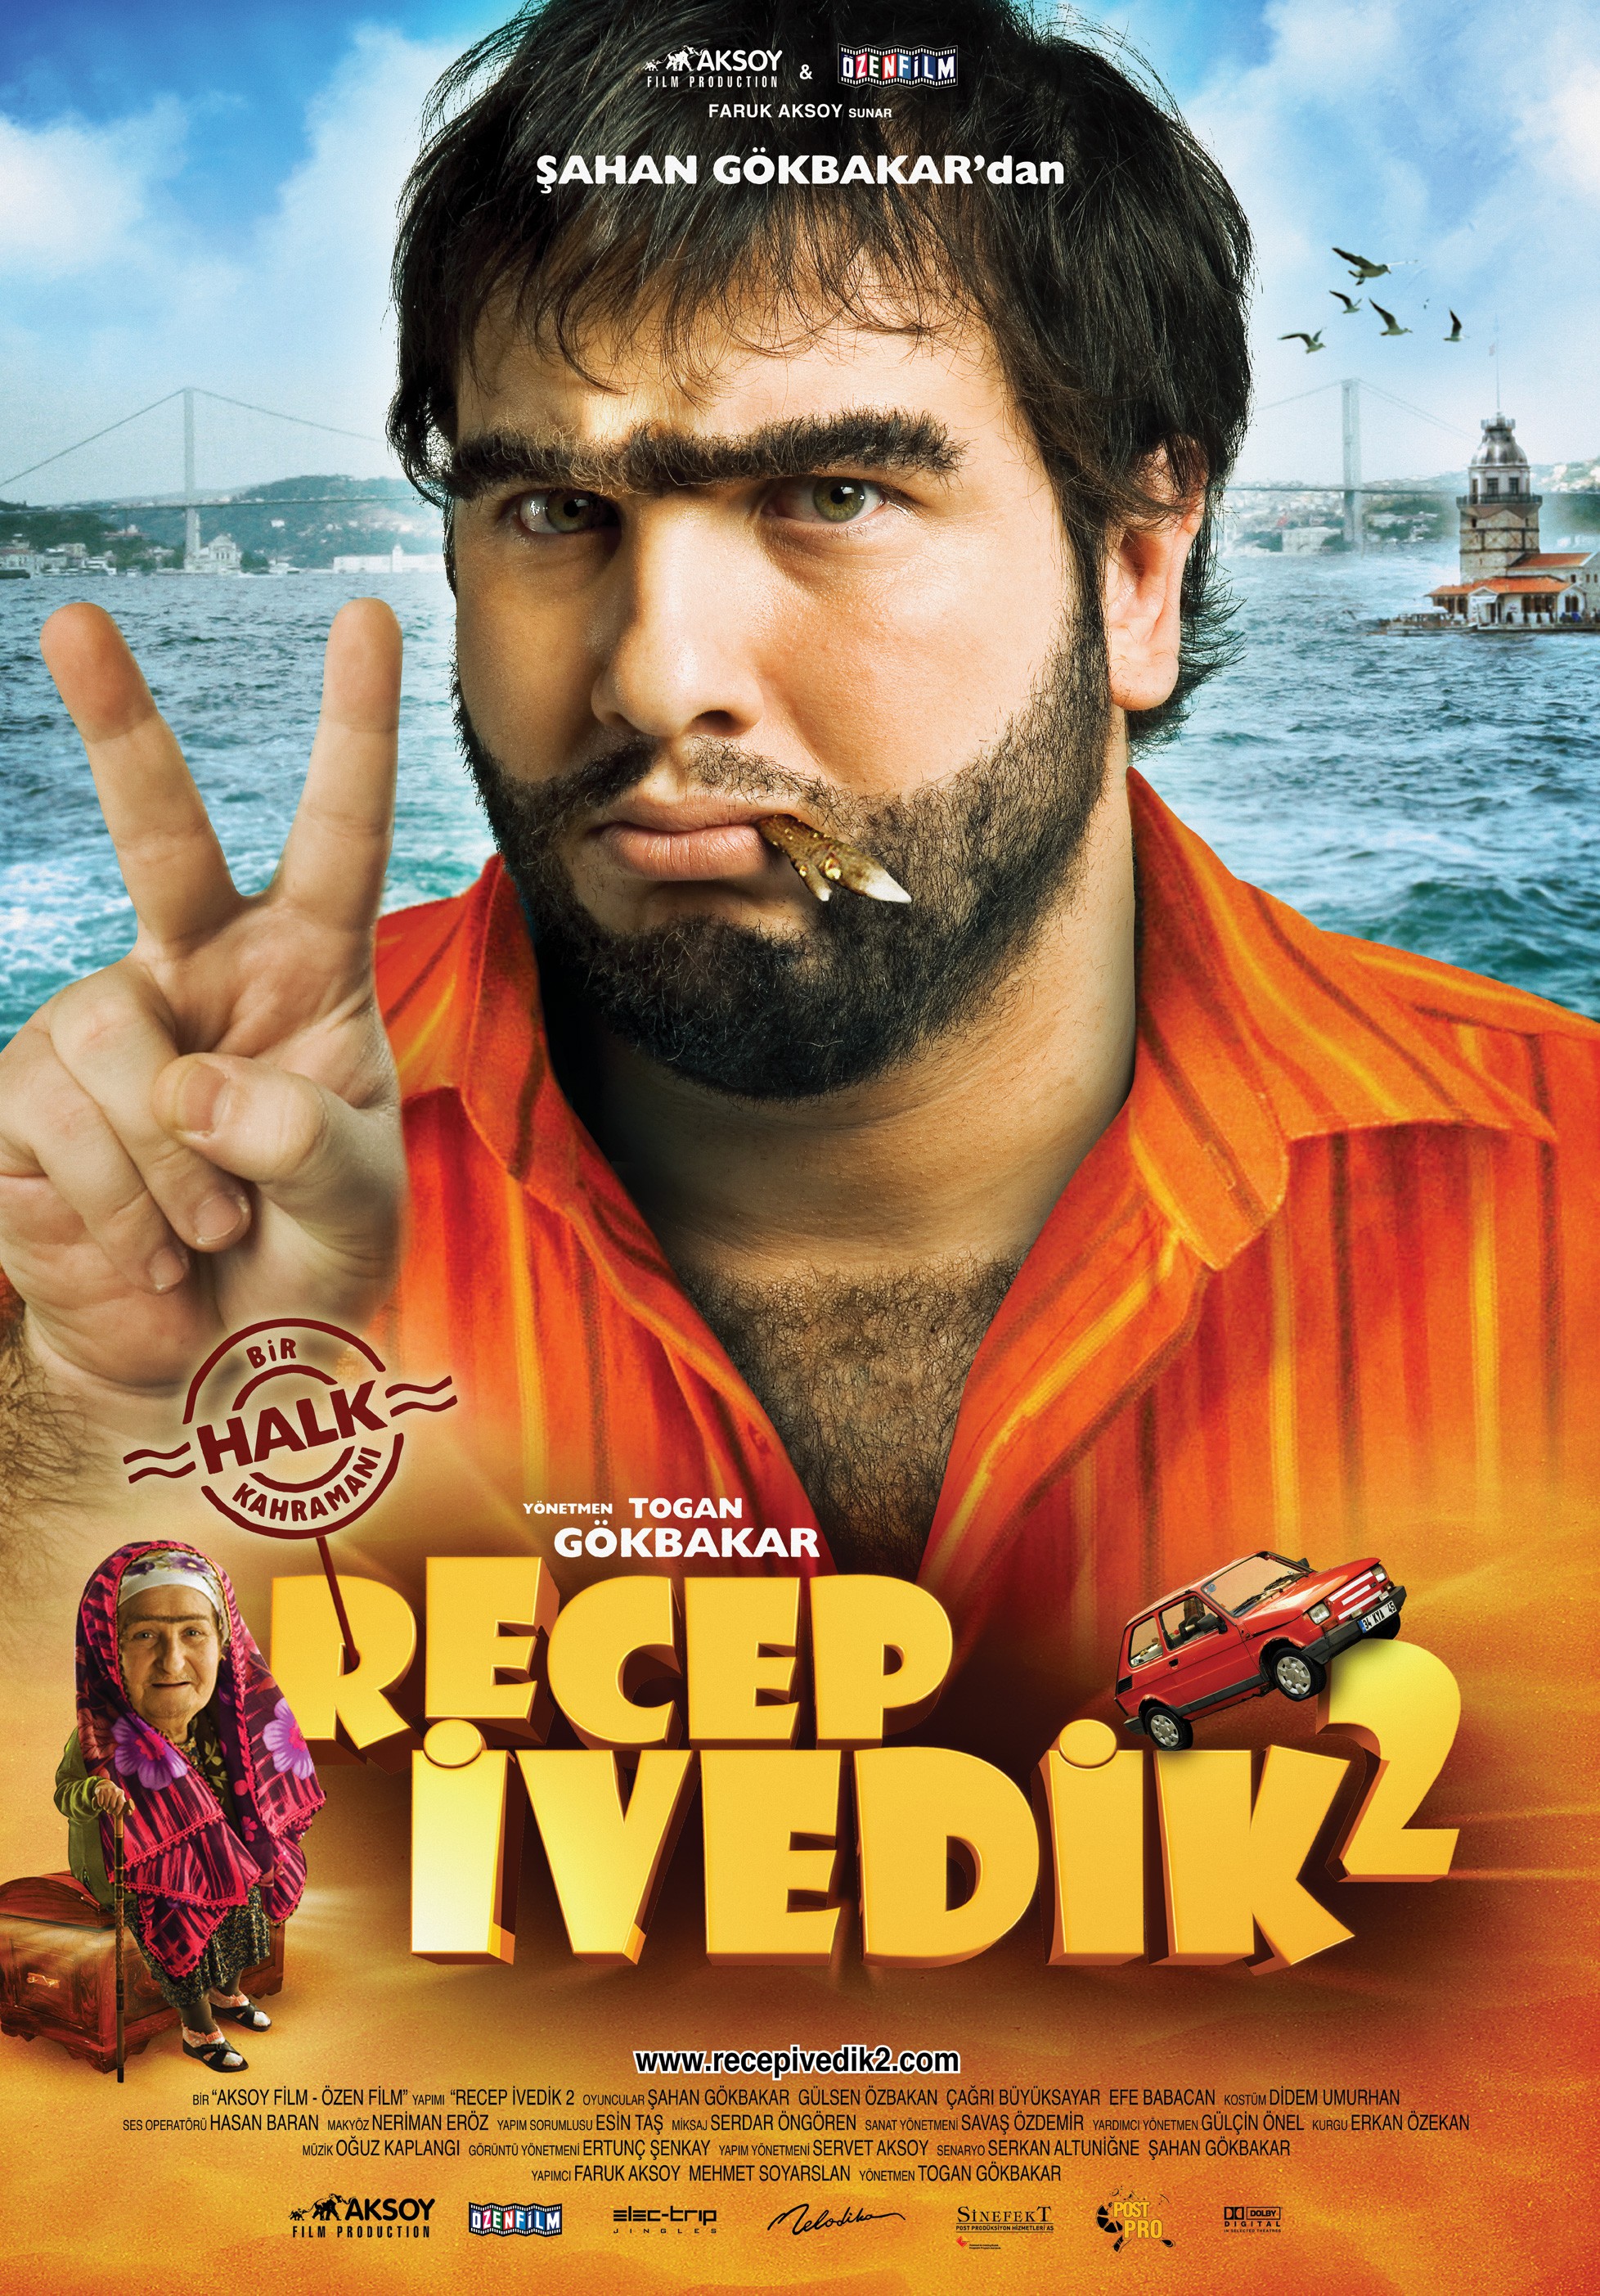 Mega Sized Movie Poster Image for Recep Ivedik 2 